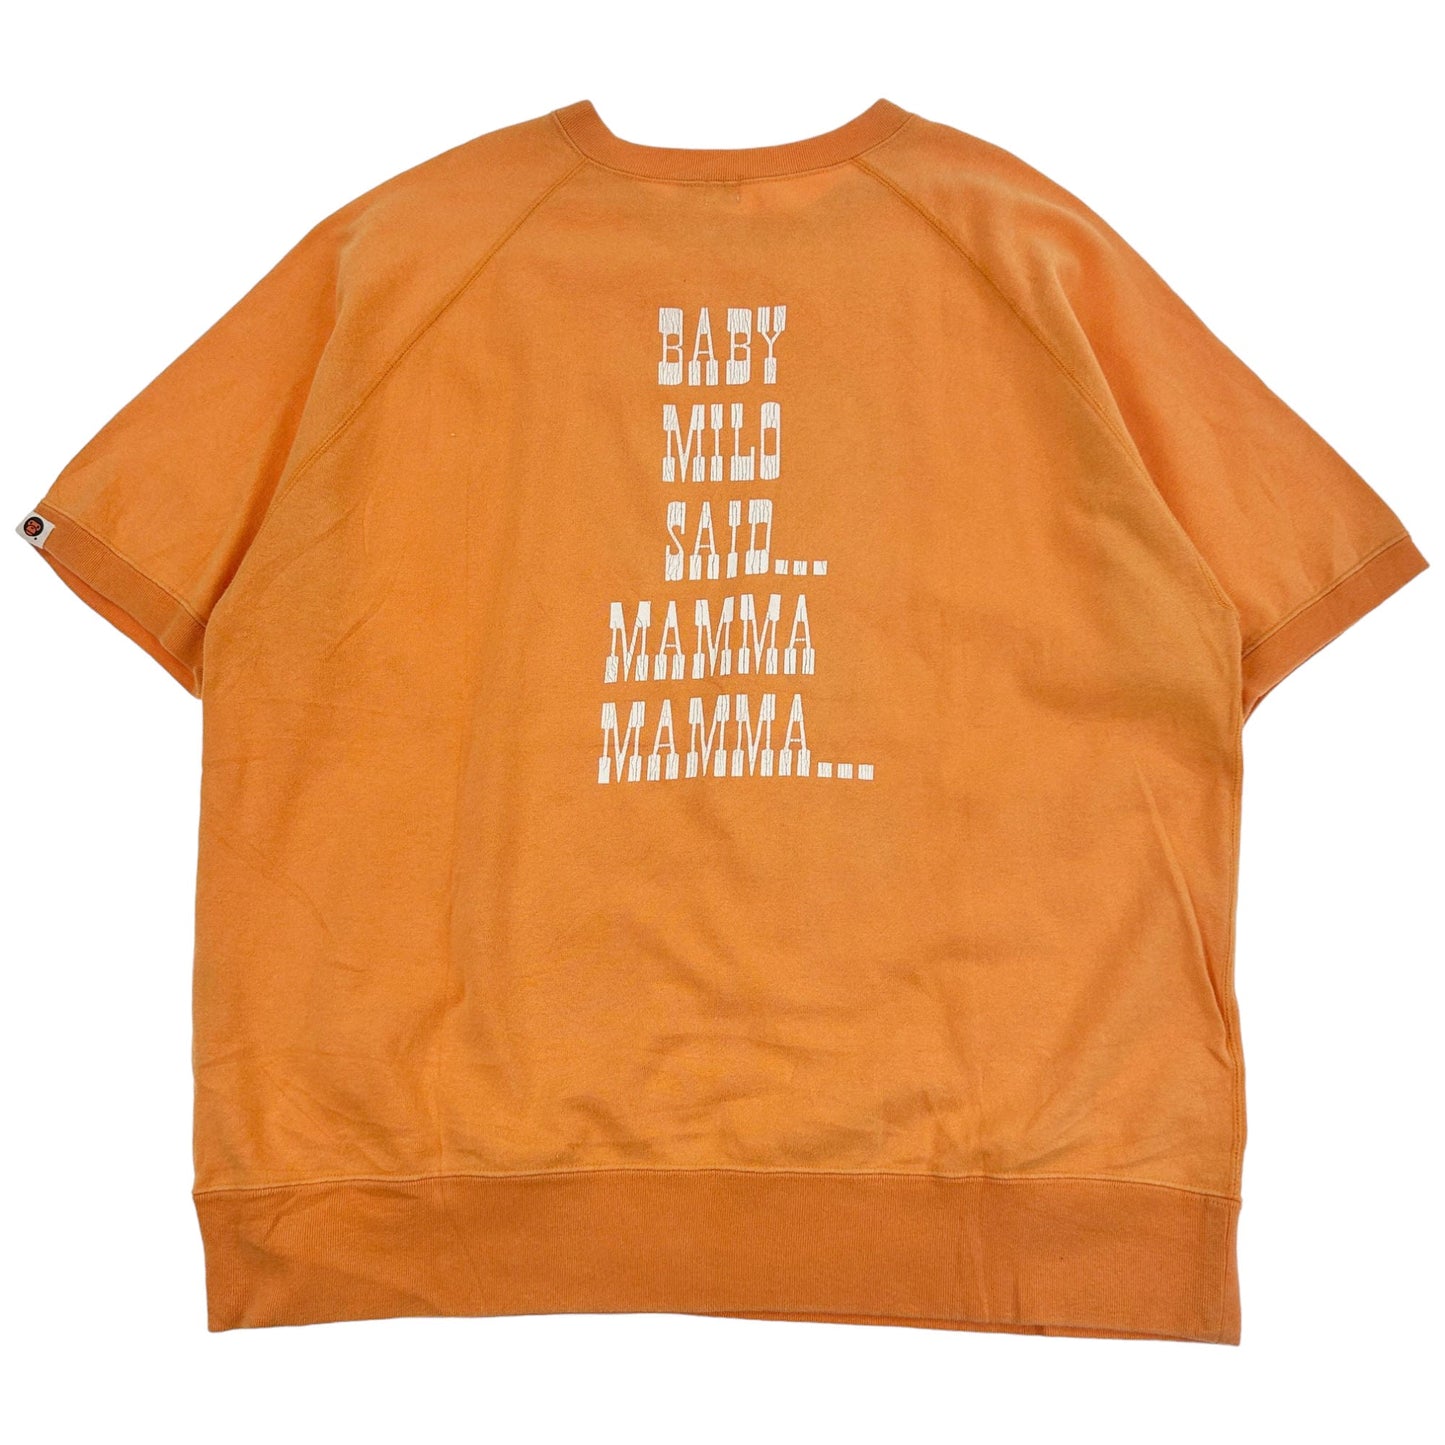 Vintage BAPE Baby Milo Graphic Sweatshirt Size XL